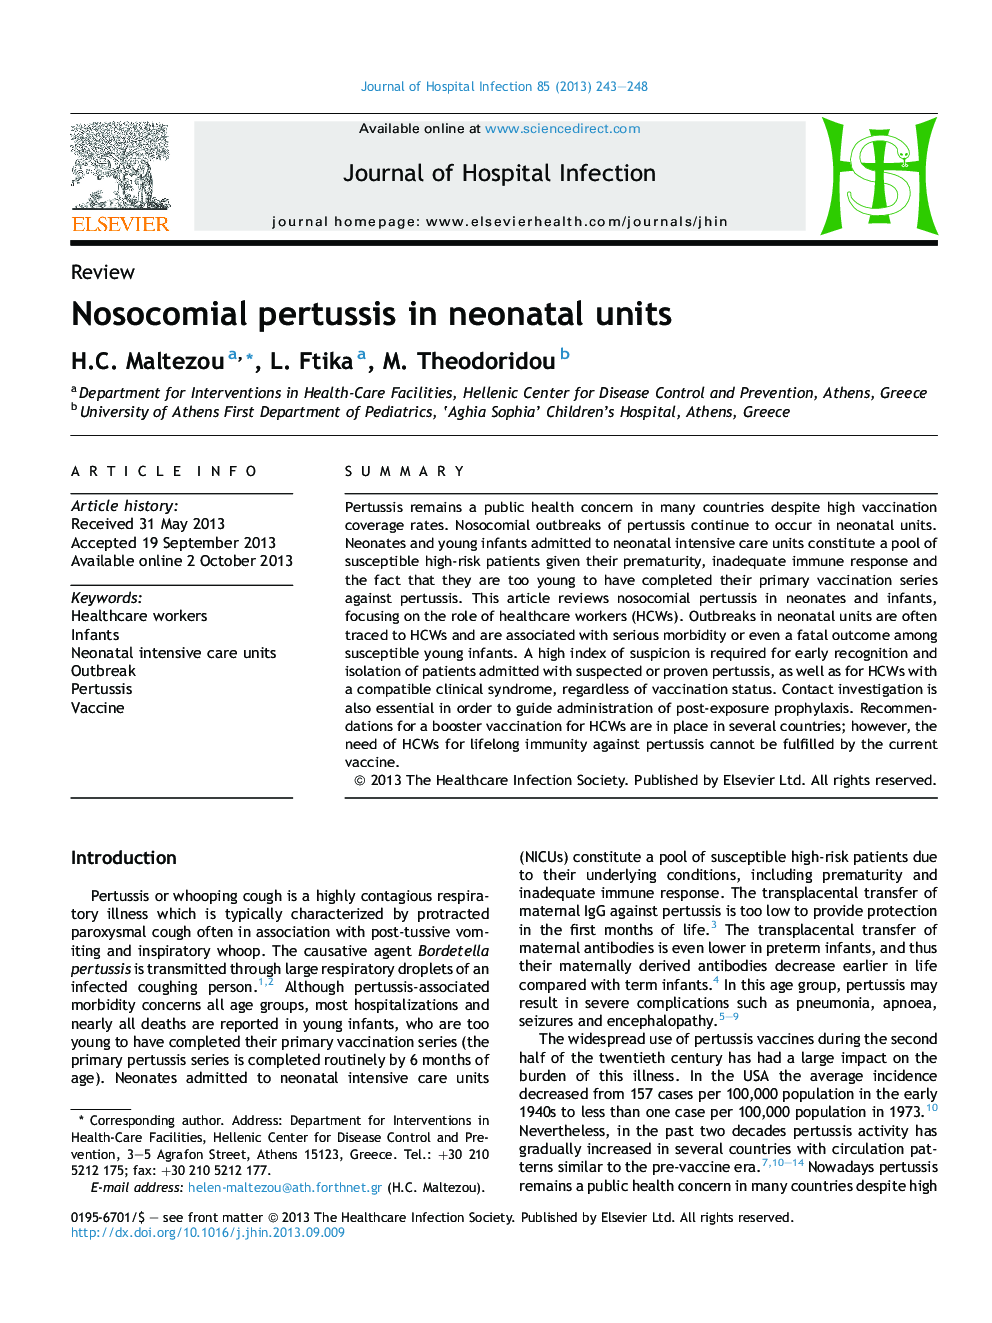 Nosocomial pertussis in neonatal units